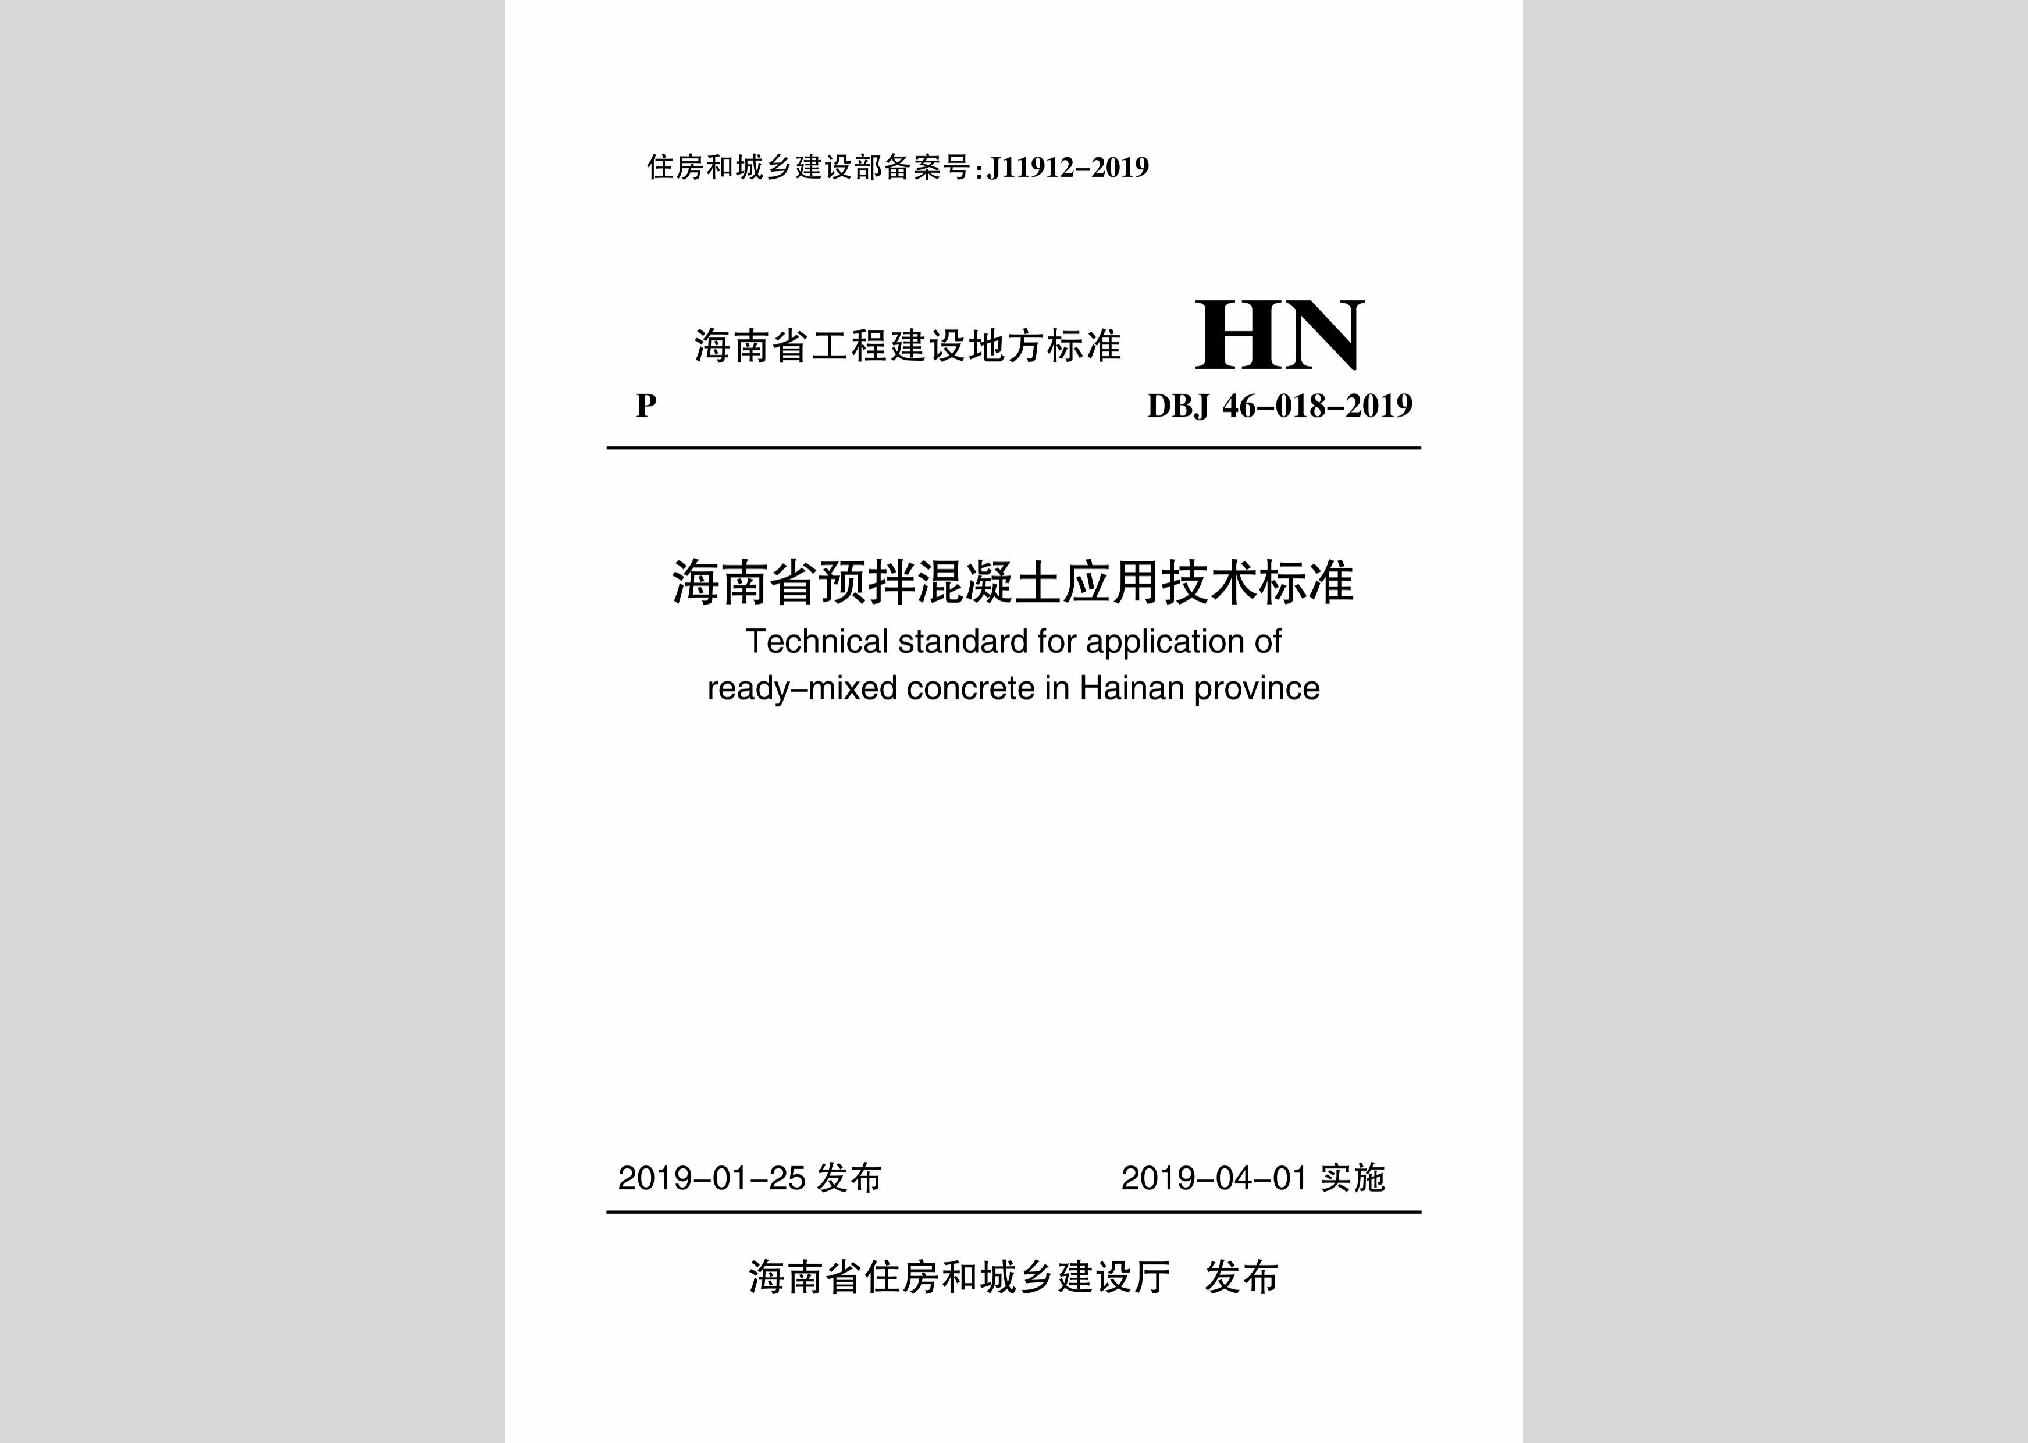 DBJ46-018-2019：海南省预拌混凝土应用技术标准